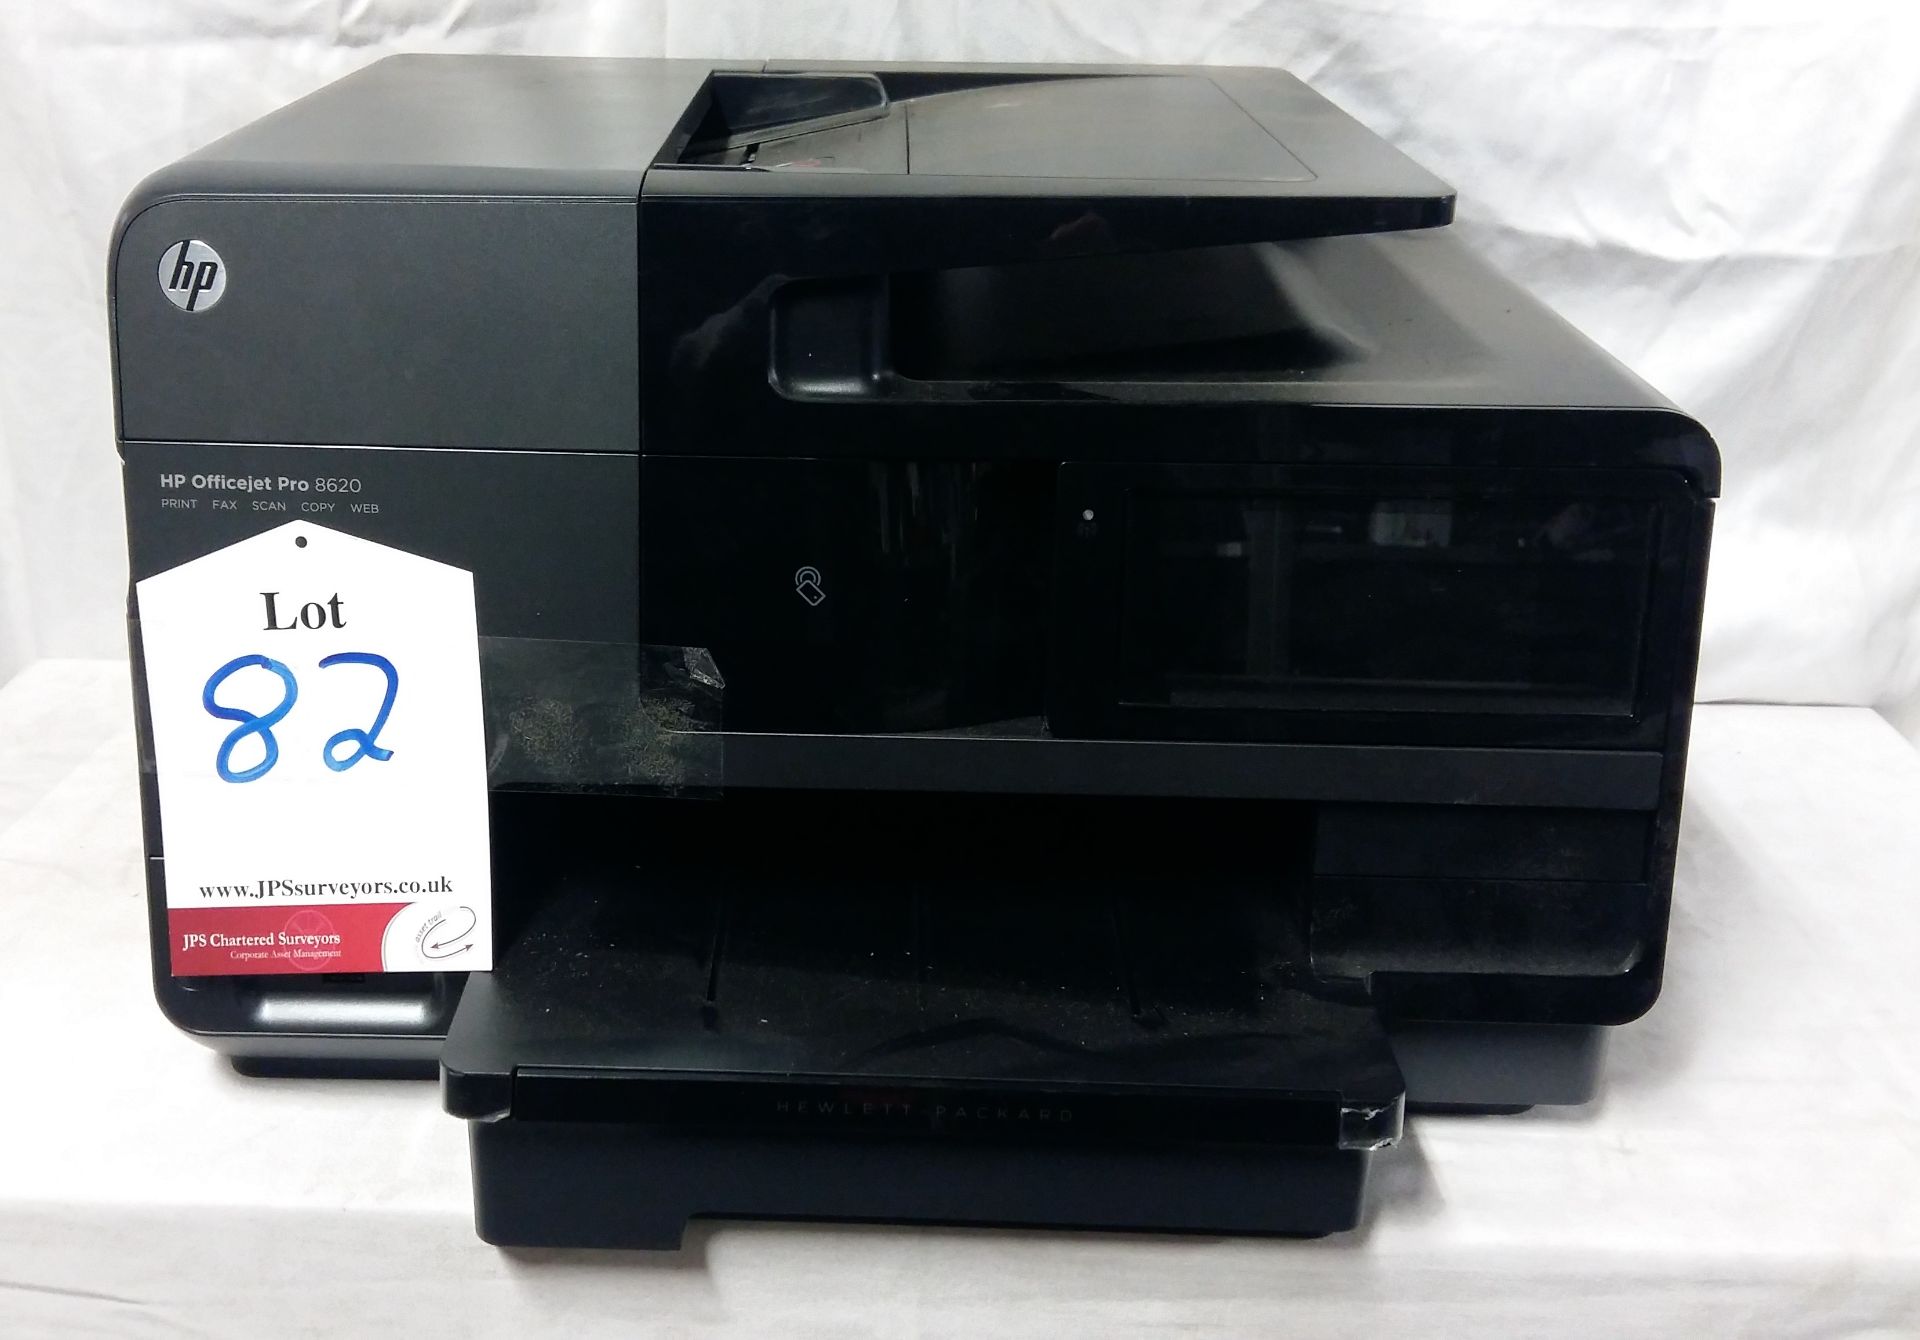 HP Officejet Pro 8600 Plus Printer & HP Officejet Pro 8620 Printer